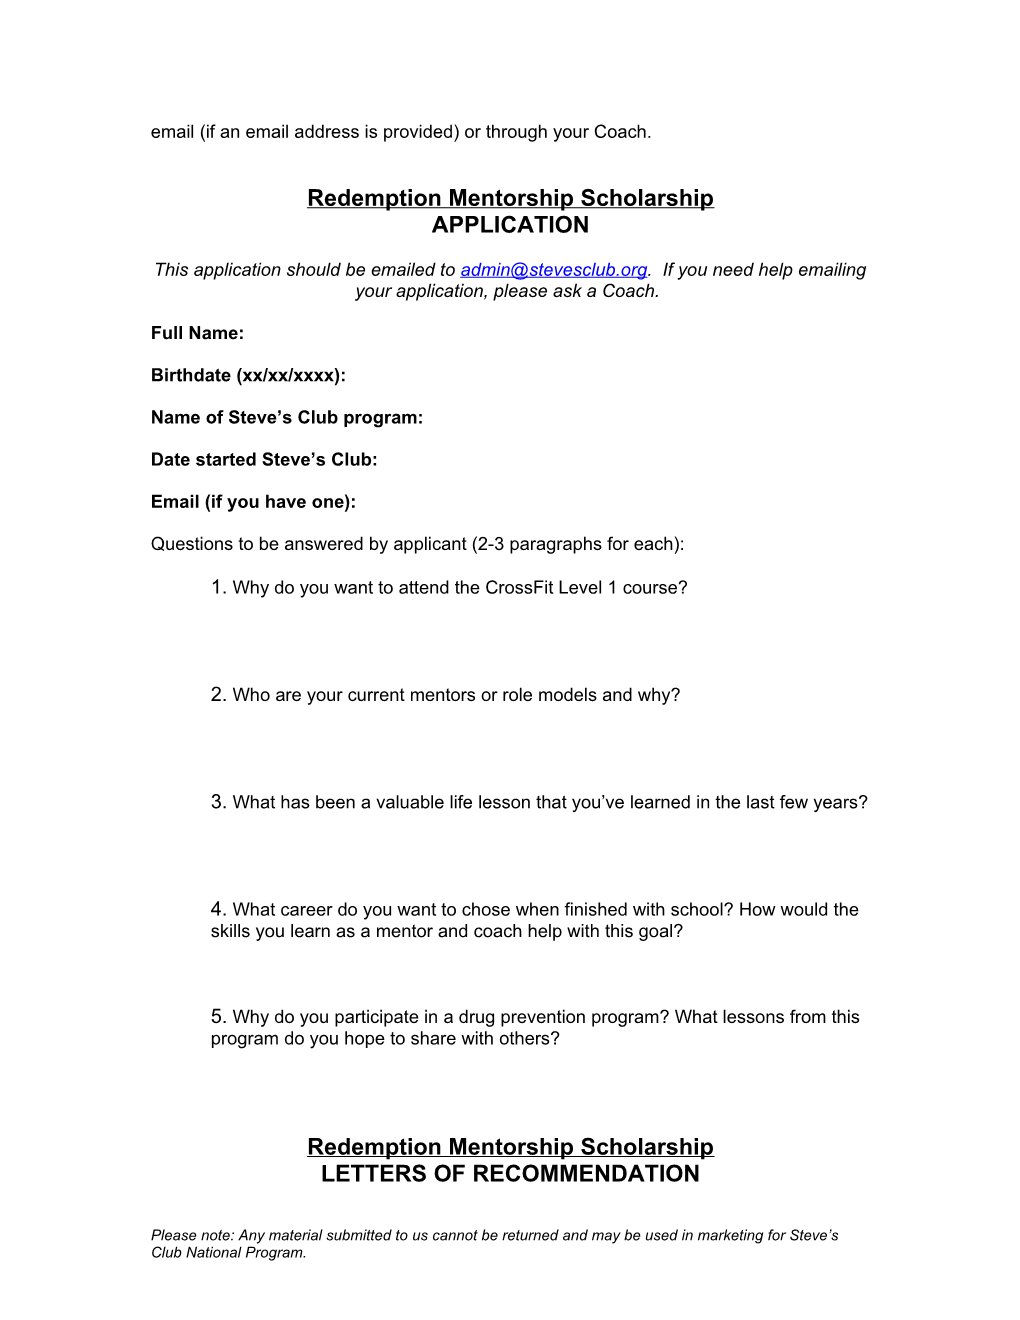 Redemption Mentorship Scholarship